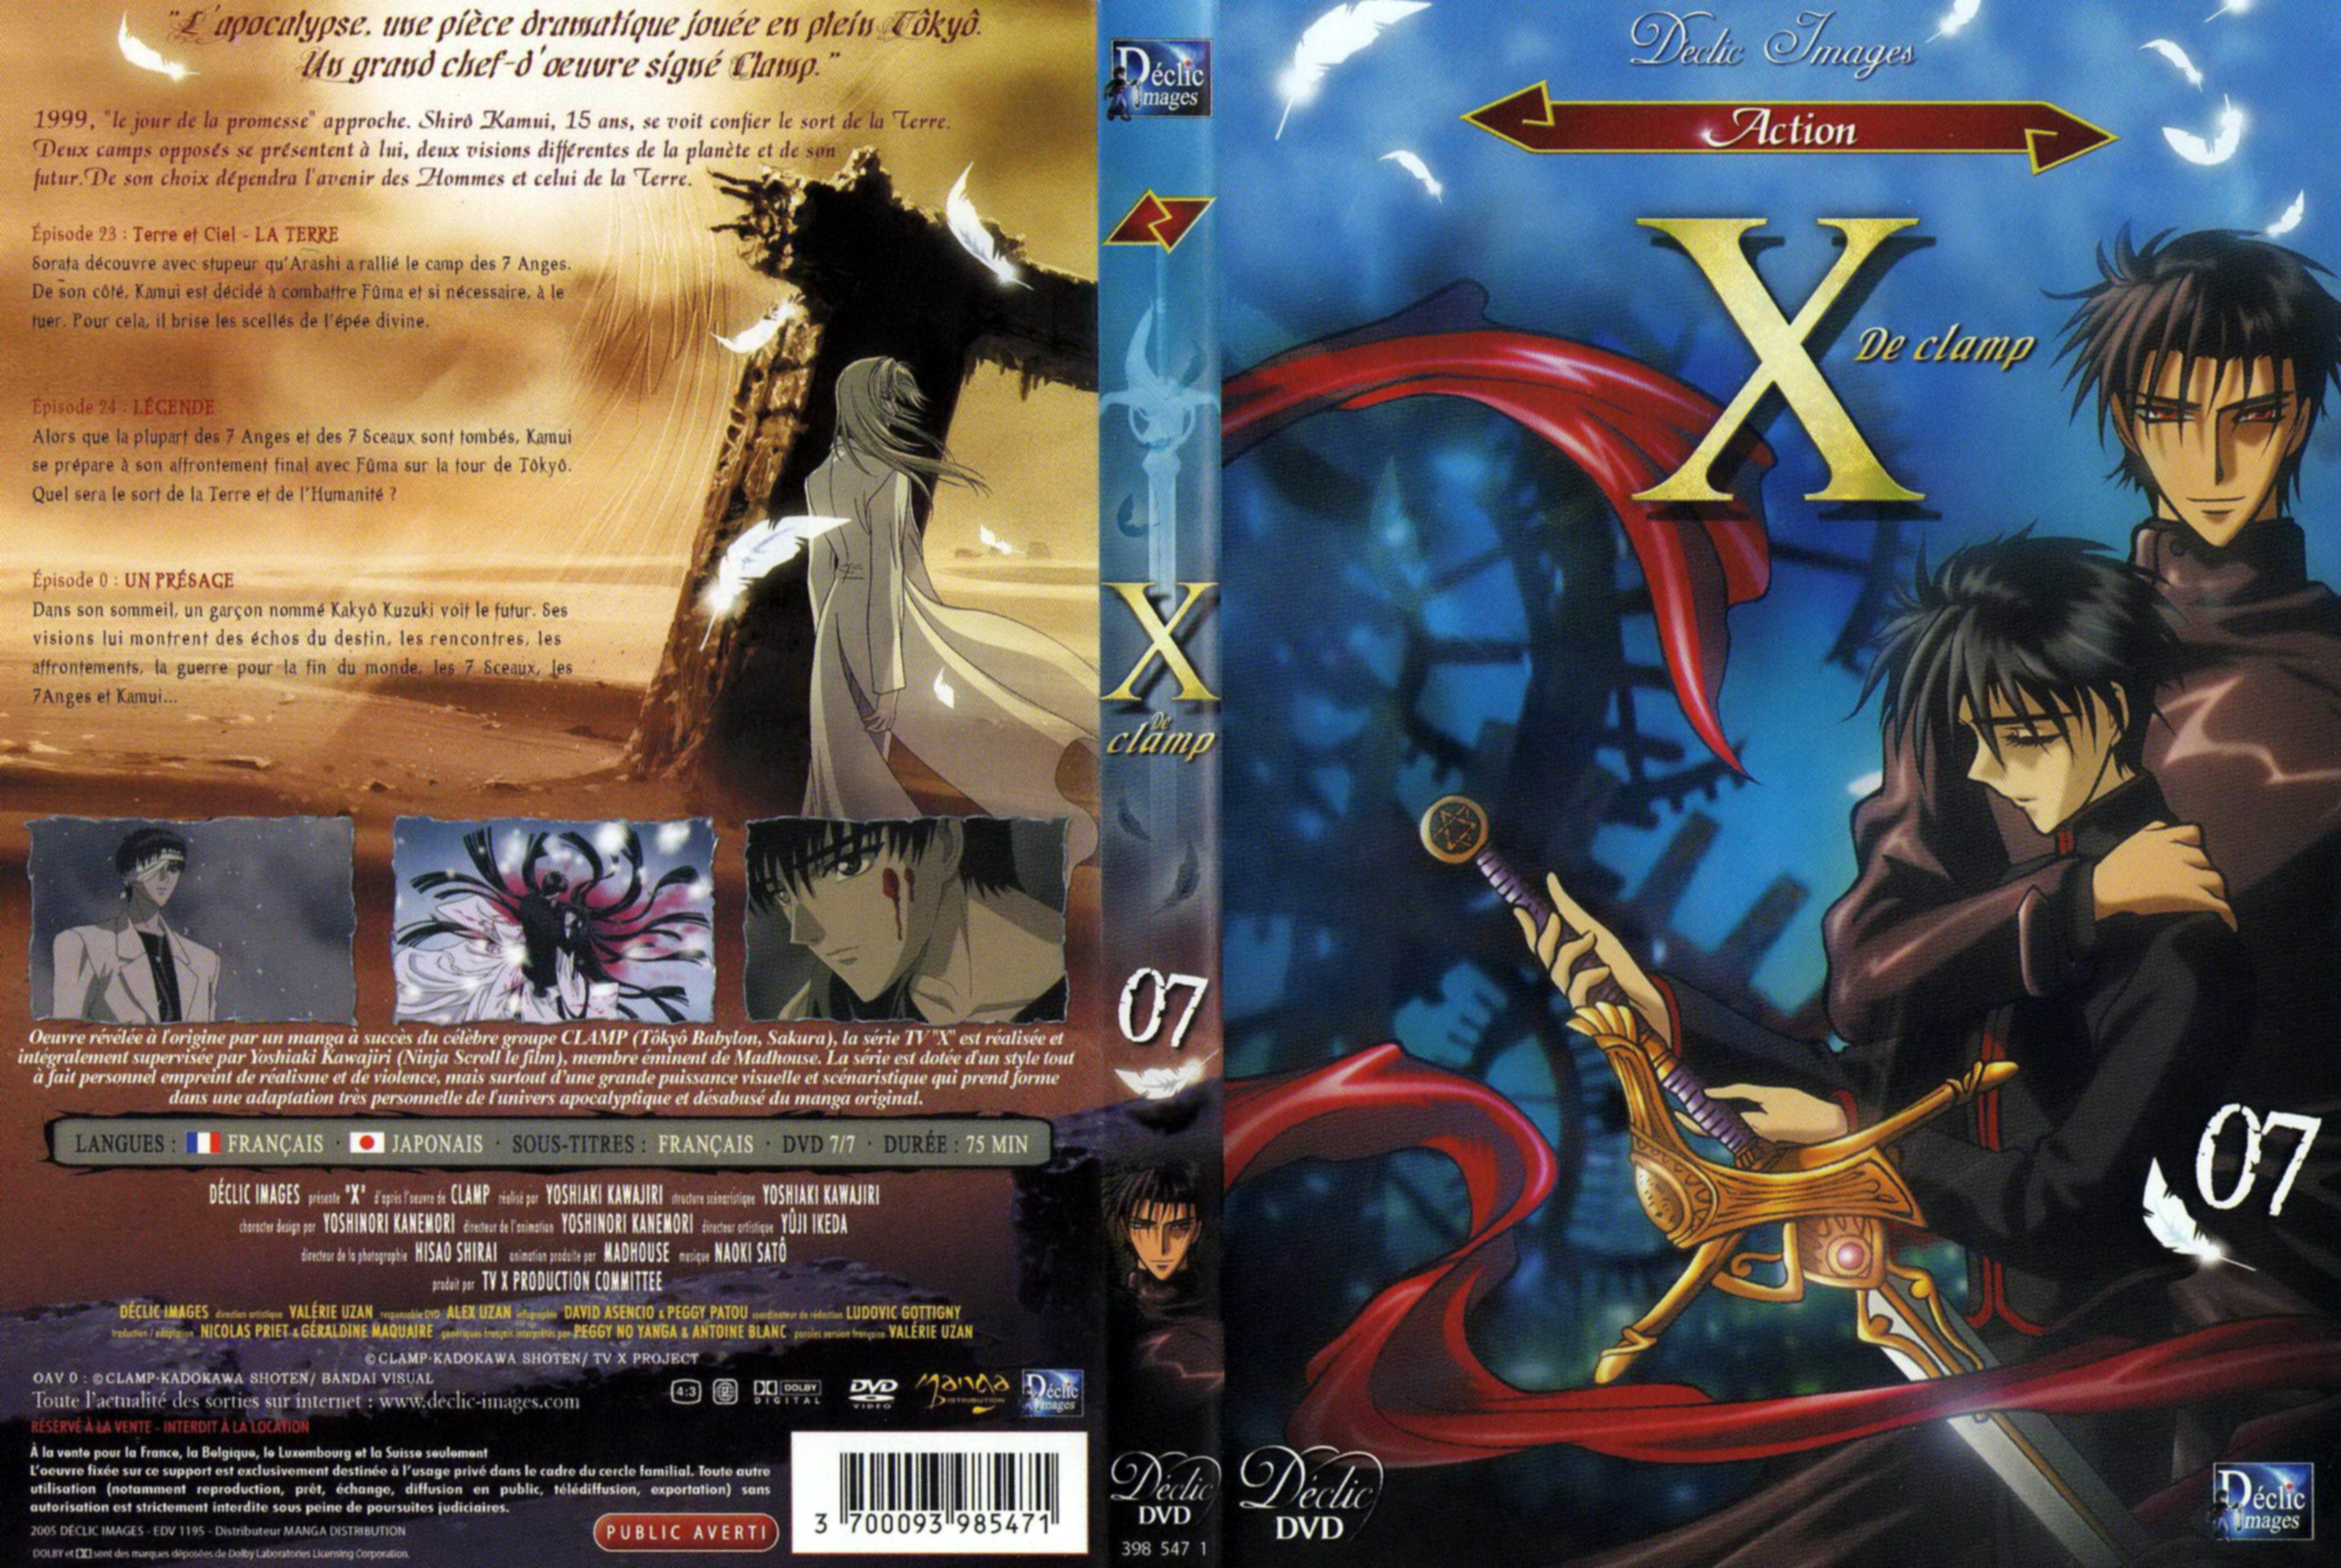 Jaquette DVD X de clamp vol 7